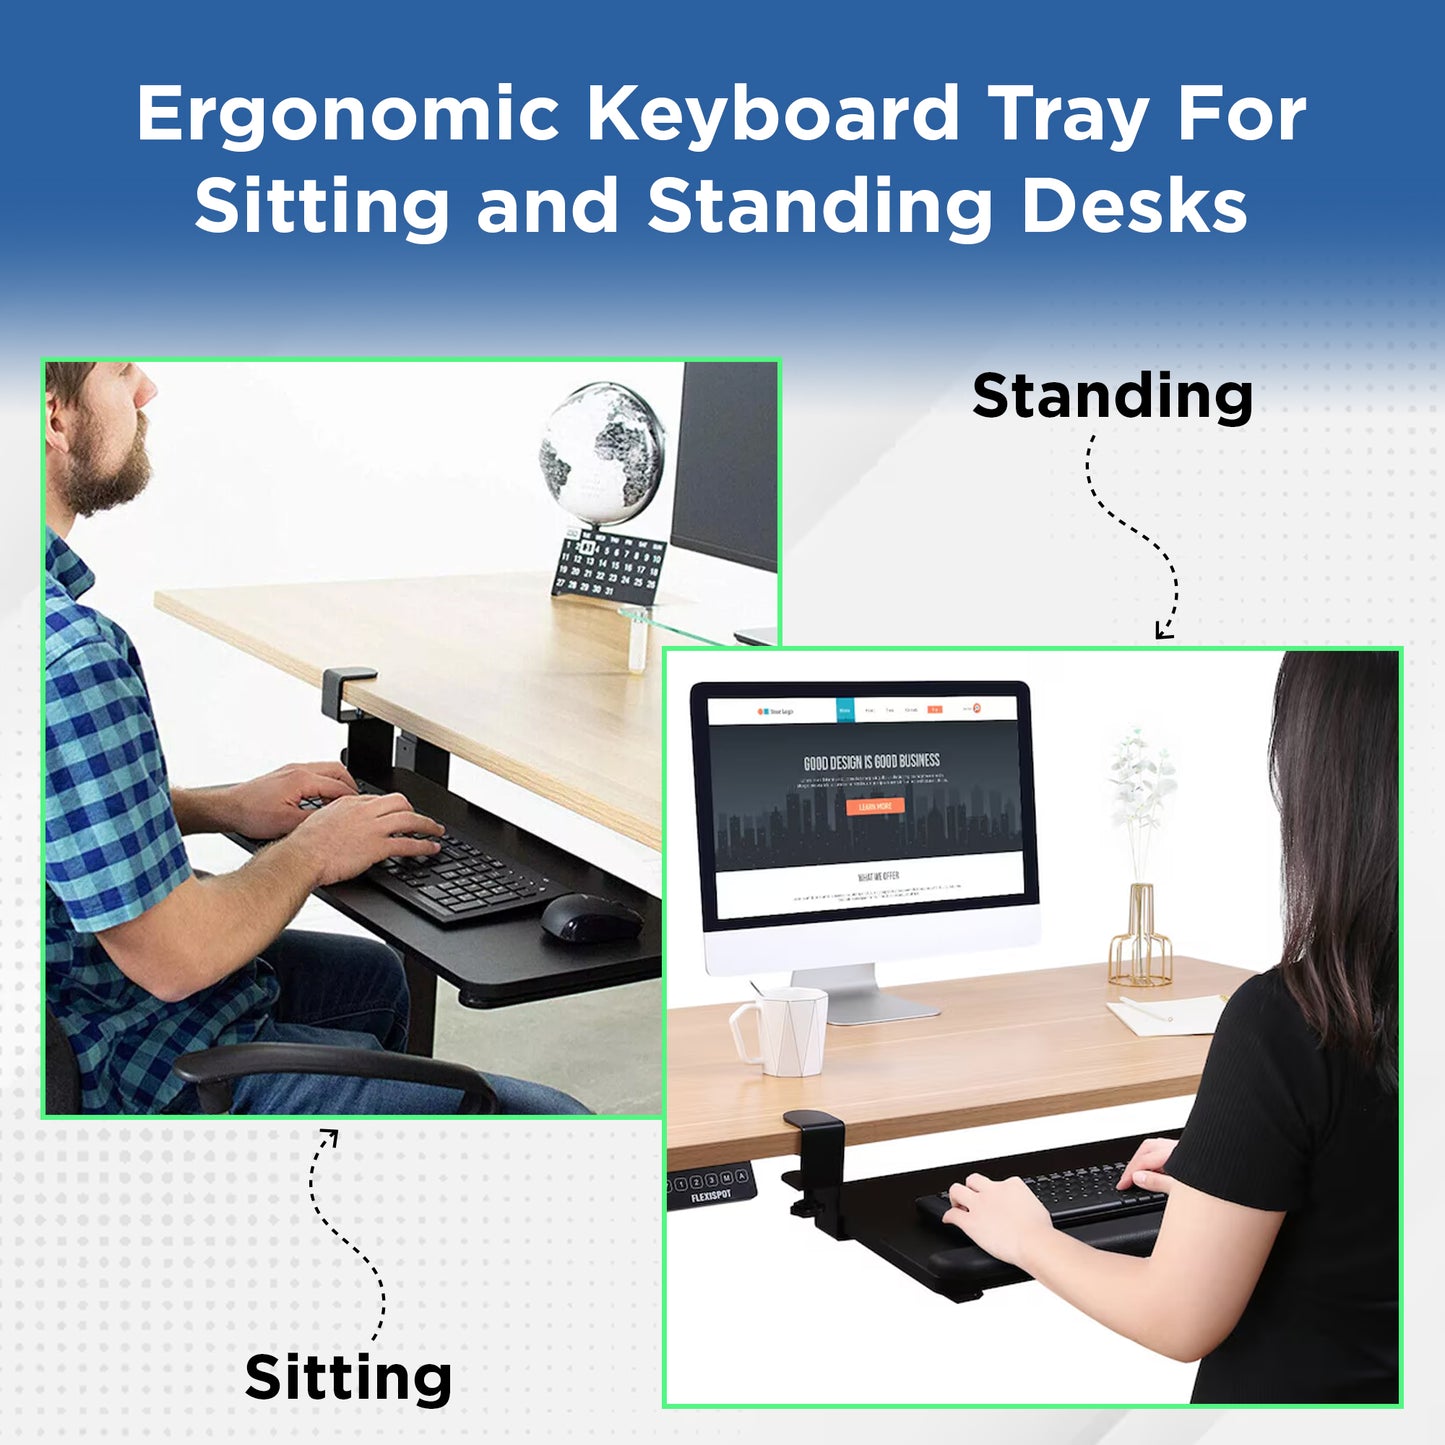 KT4 Clamp On Keyboard Tray Under Desk